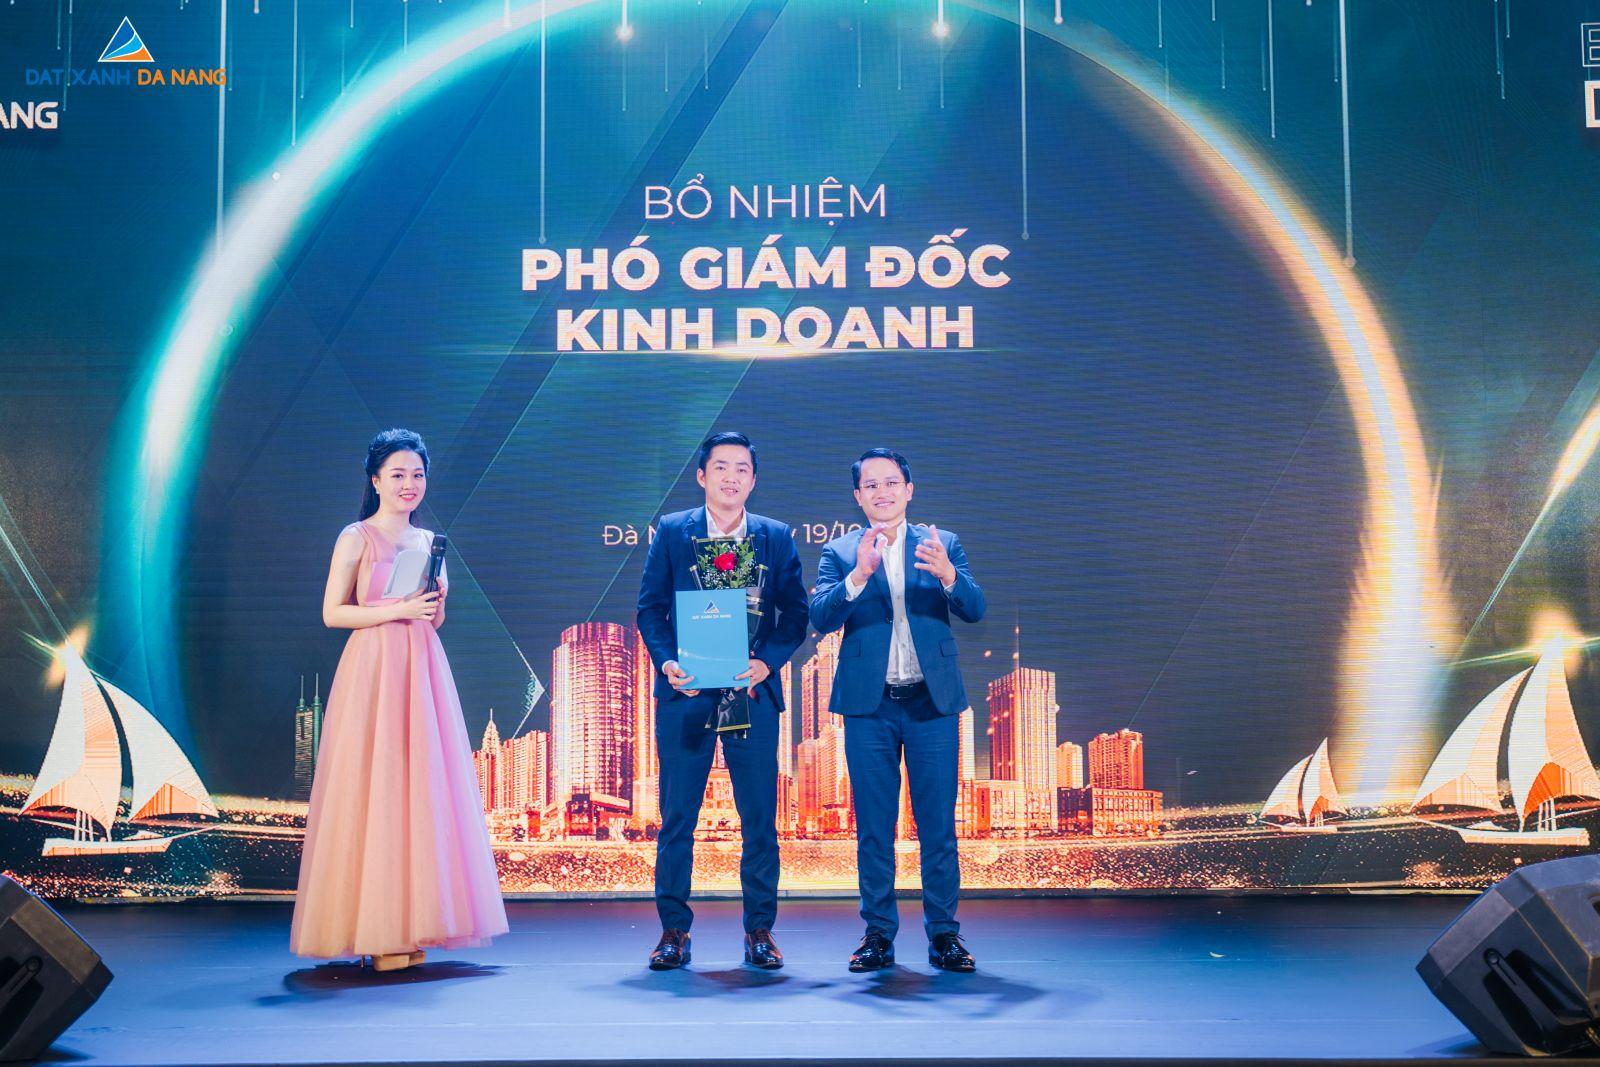 TỔNG KẾT VÀ VINH DANH QUÝ III/2019: BELIEVE IN YOUR DREAM! - Viet Nam Smart City